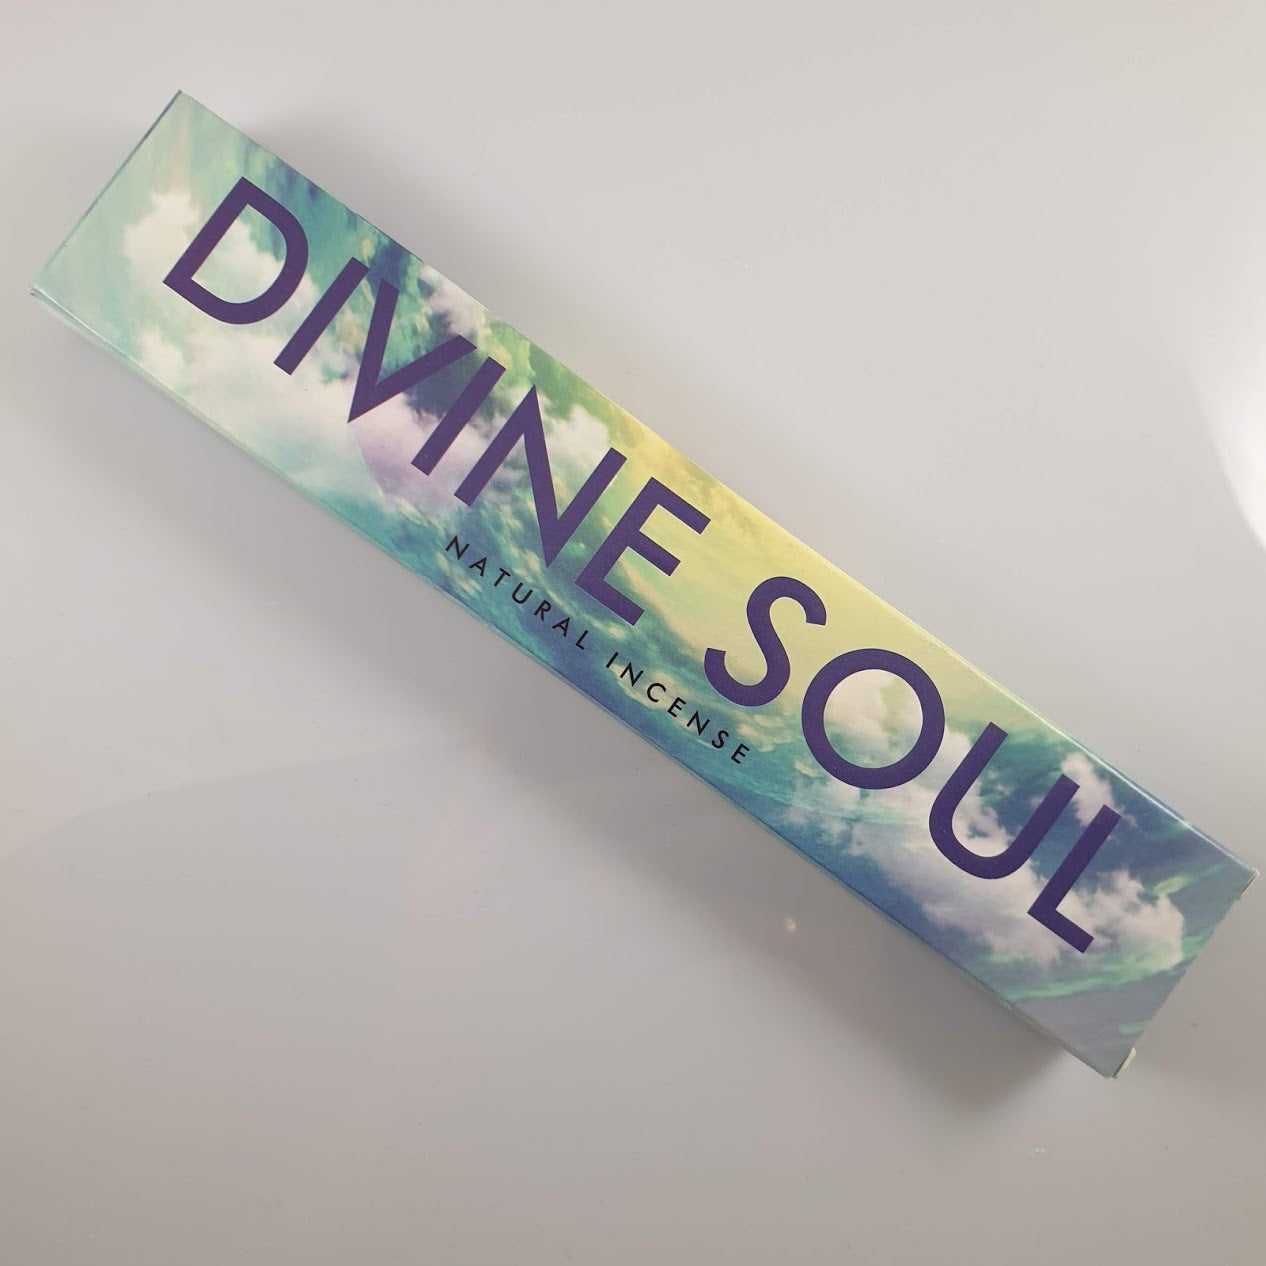 New Moon Divine Soul 15gm - Rivendell Shop